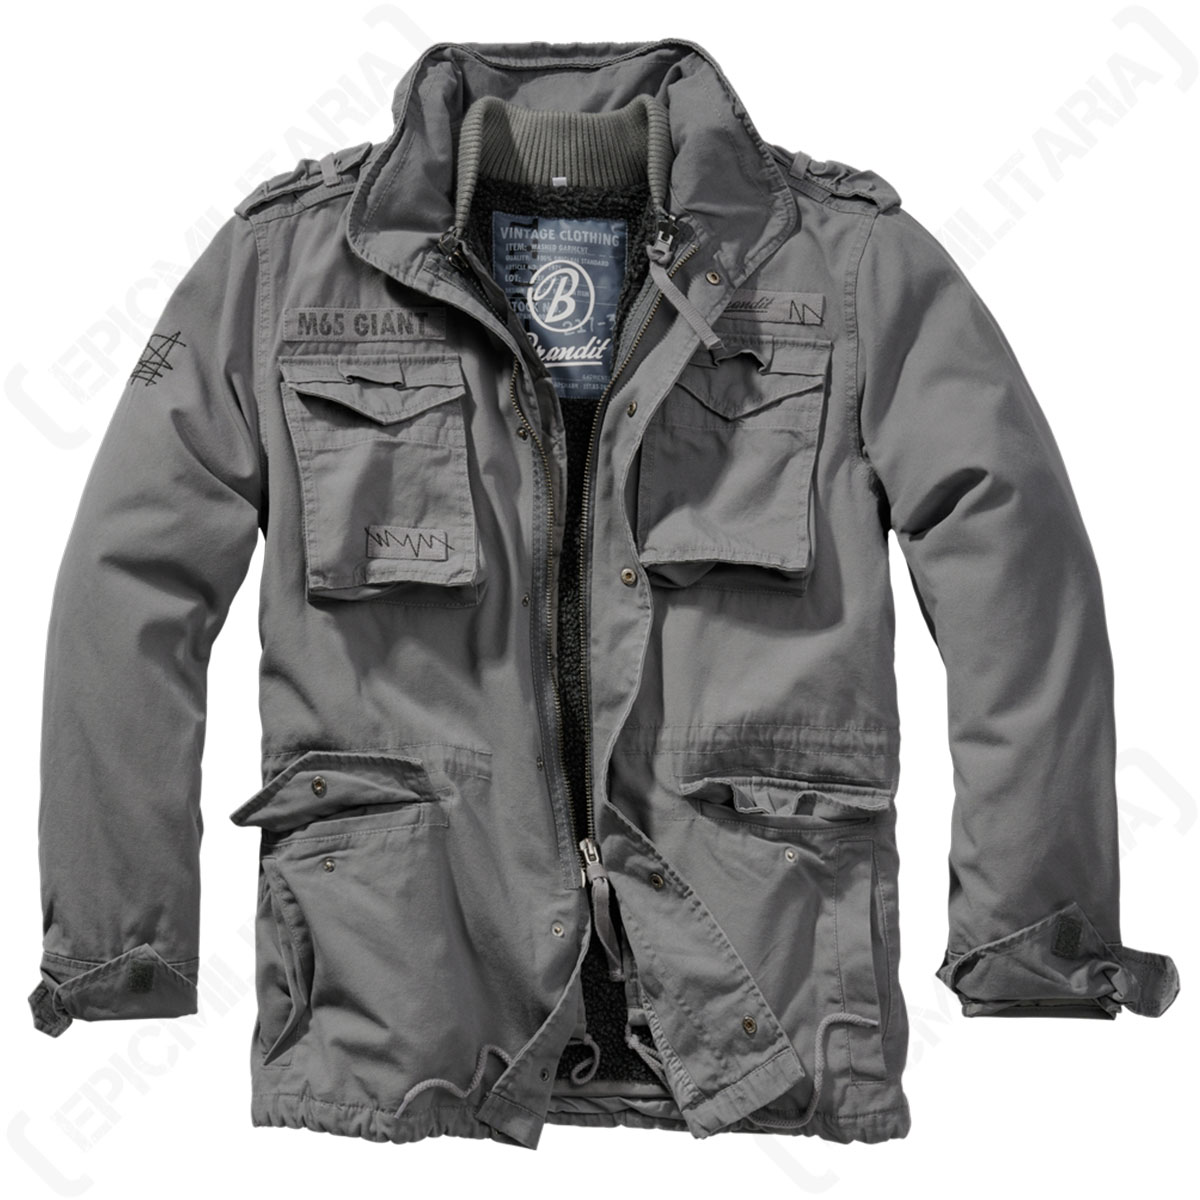 Brandit M65 Giant Jacket - Charcoal Militaria Epic Grey 